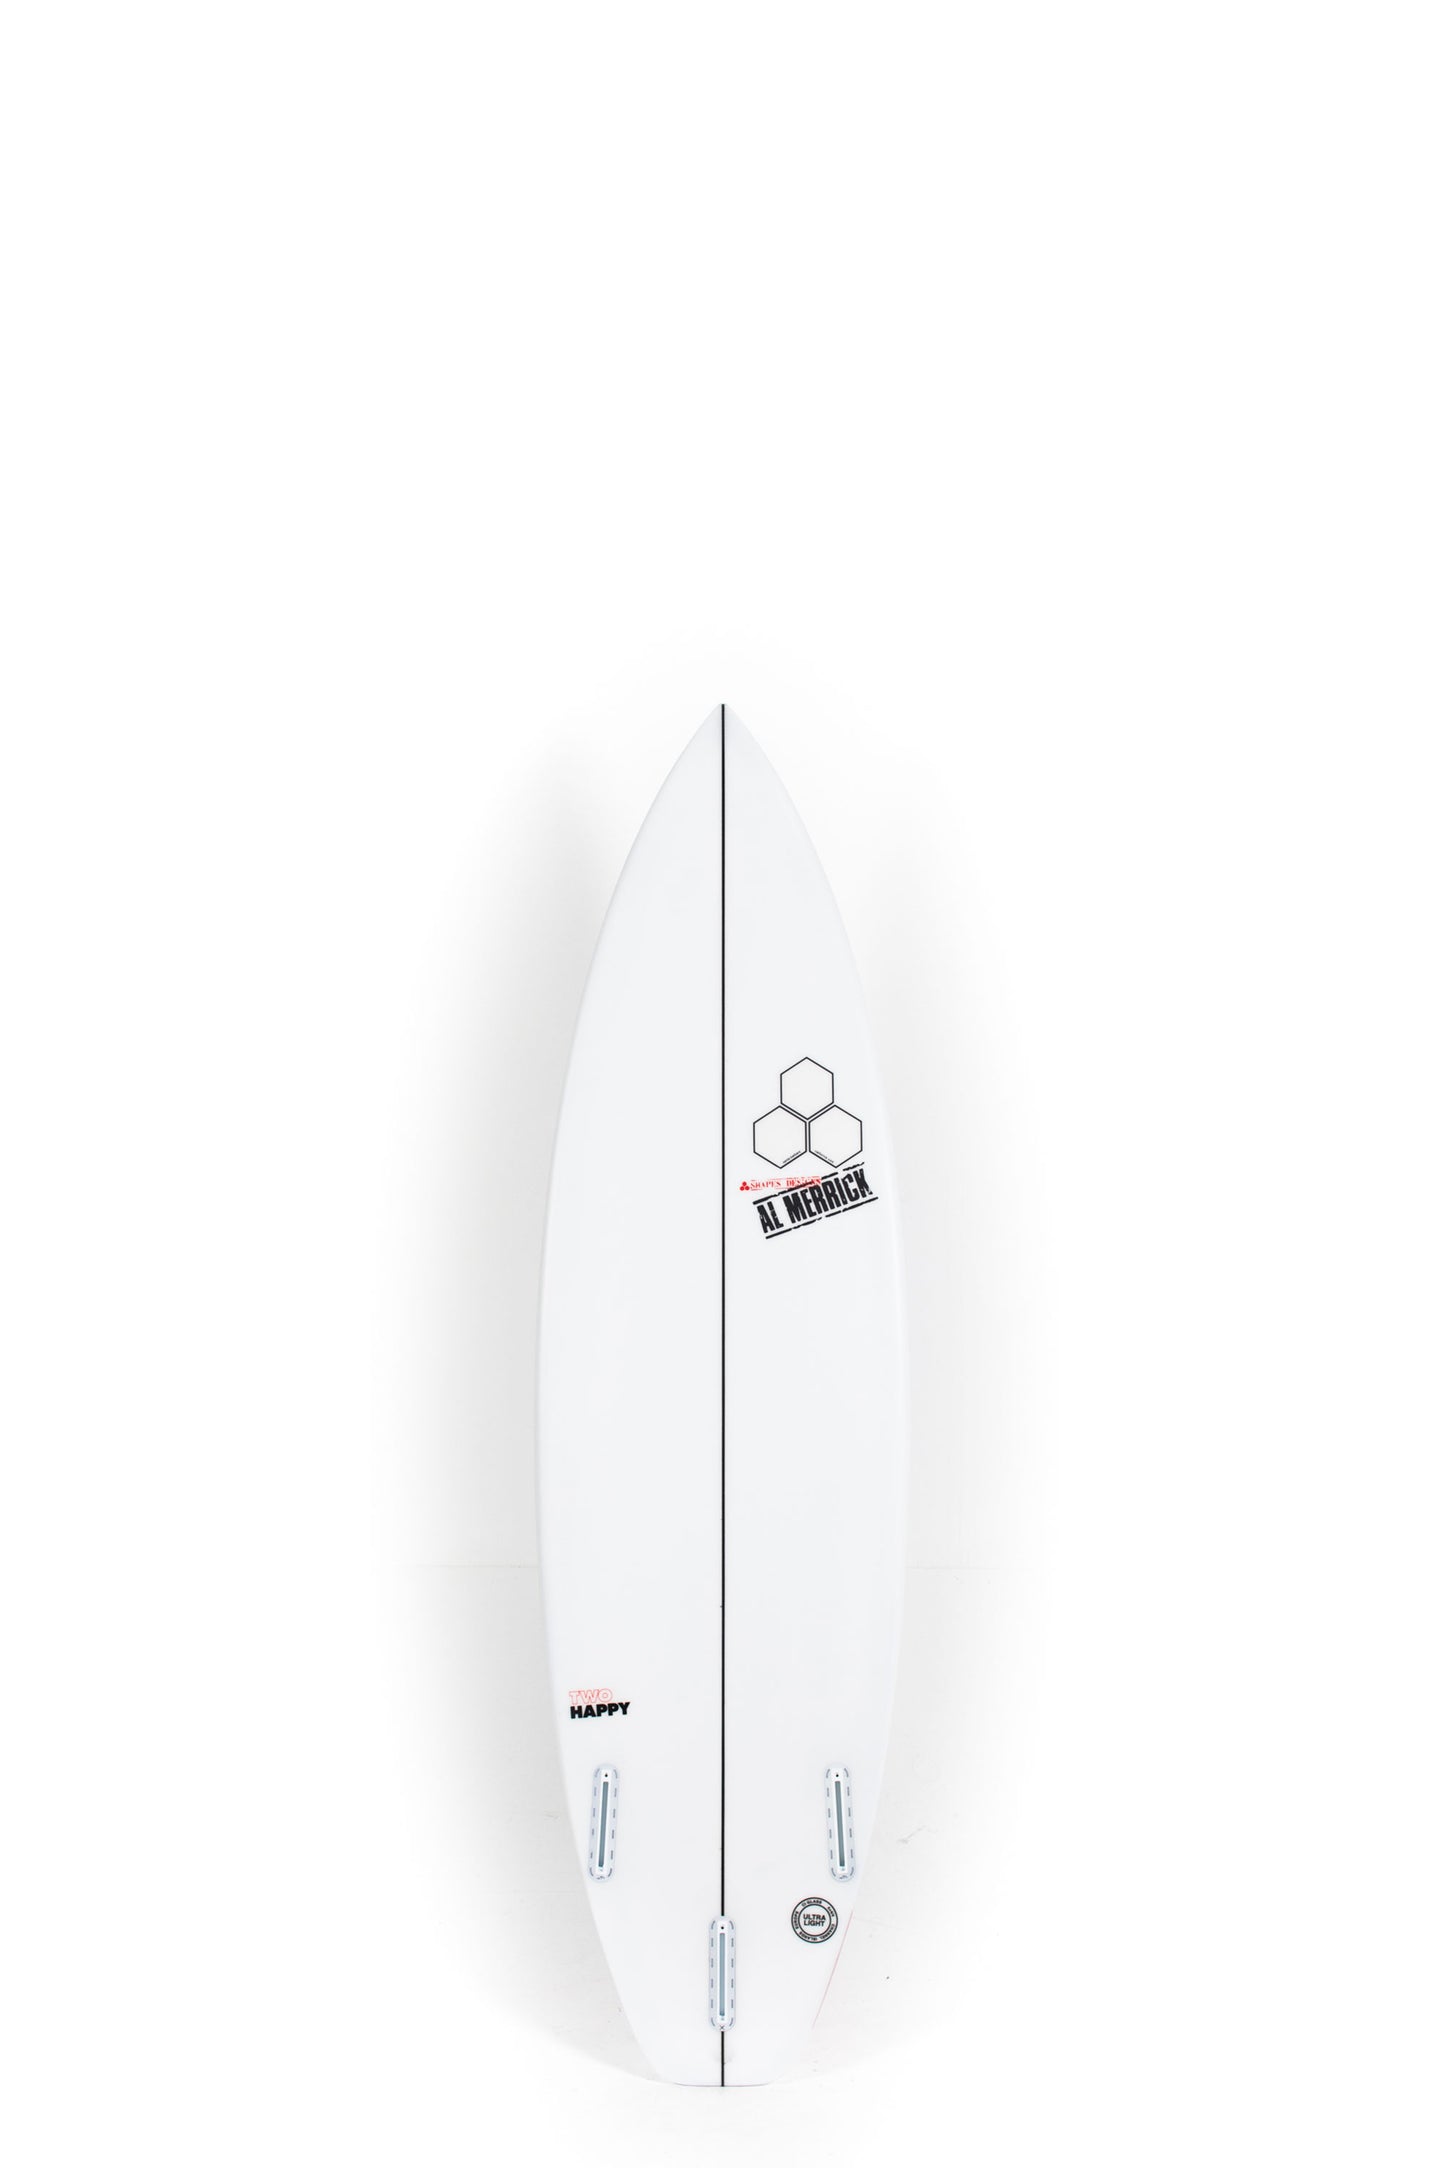 Pukas-Surf-Shop-Channel-Island-Surfboards-Two-Happy-Al-Merrick-5_10